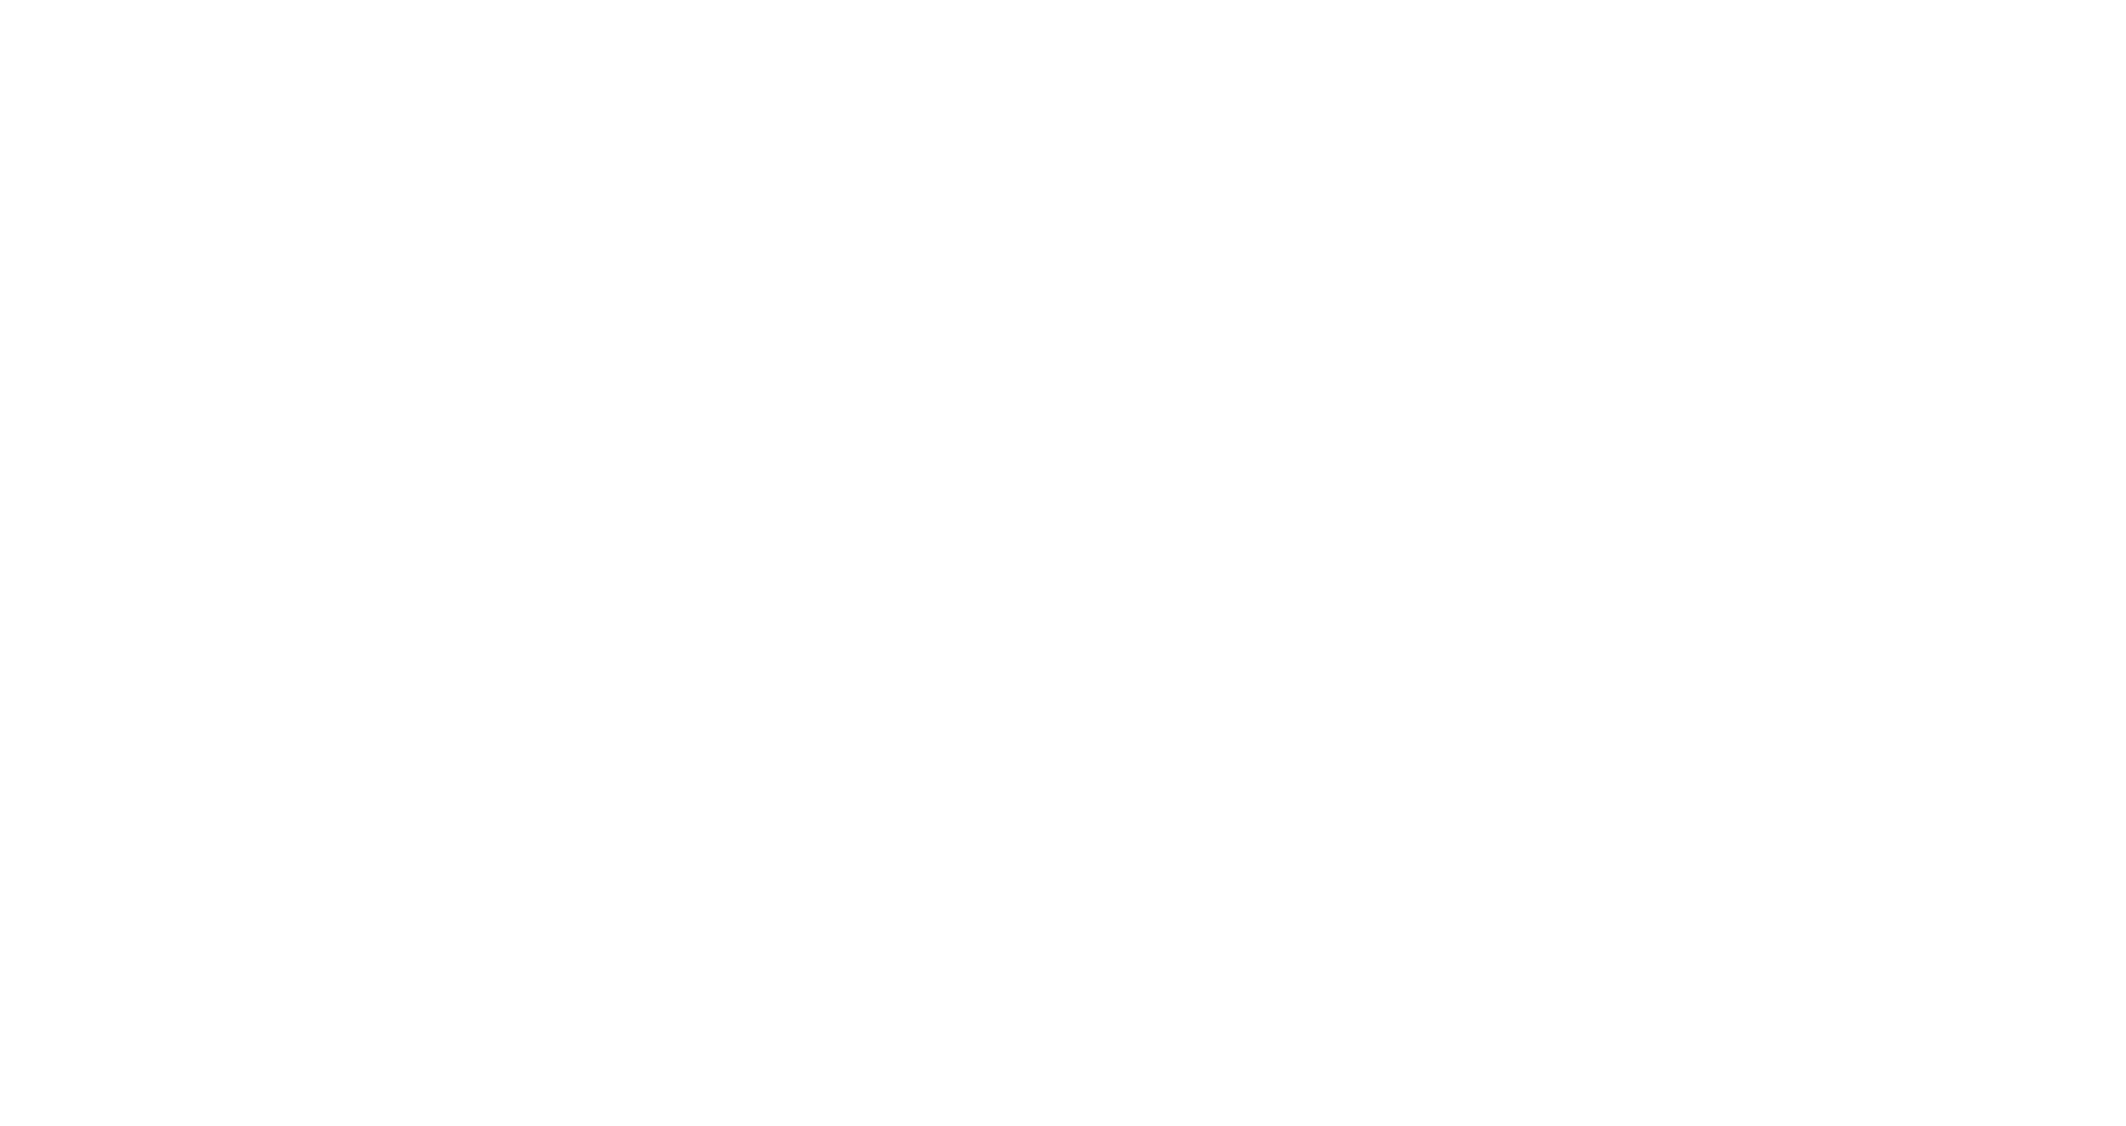 HighJump